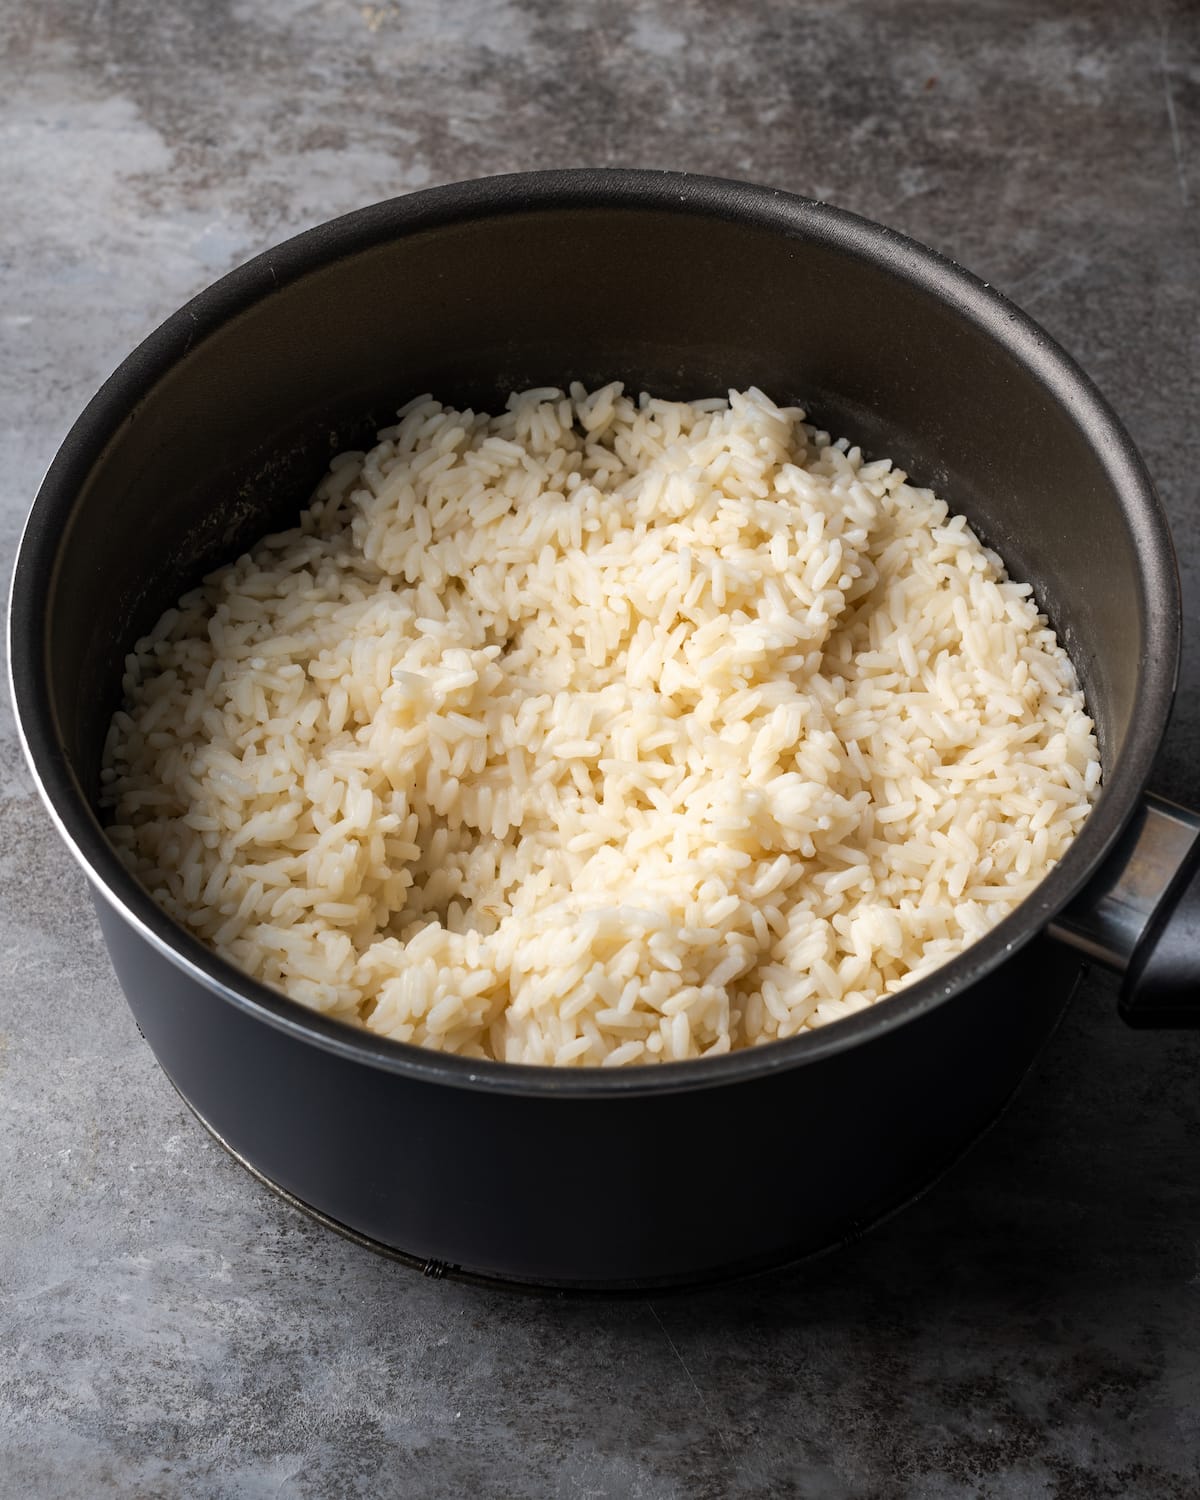 Cooked long grain rice in a black saucepan.